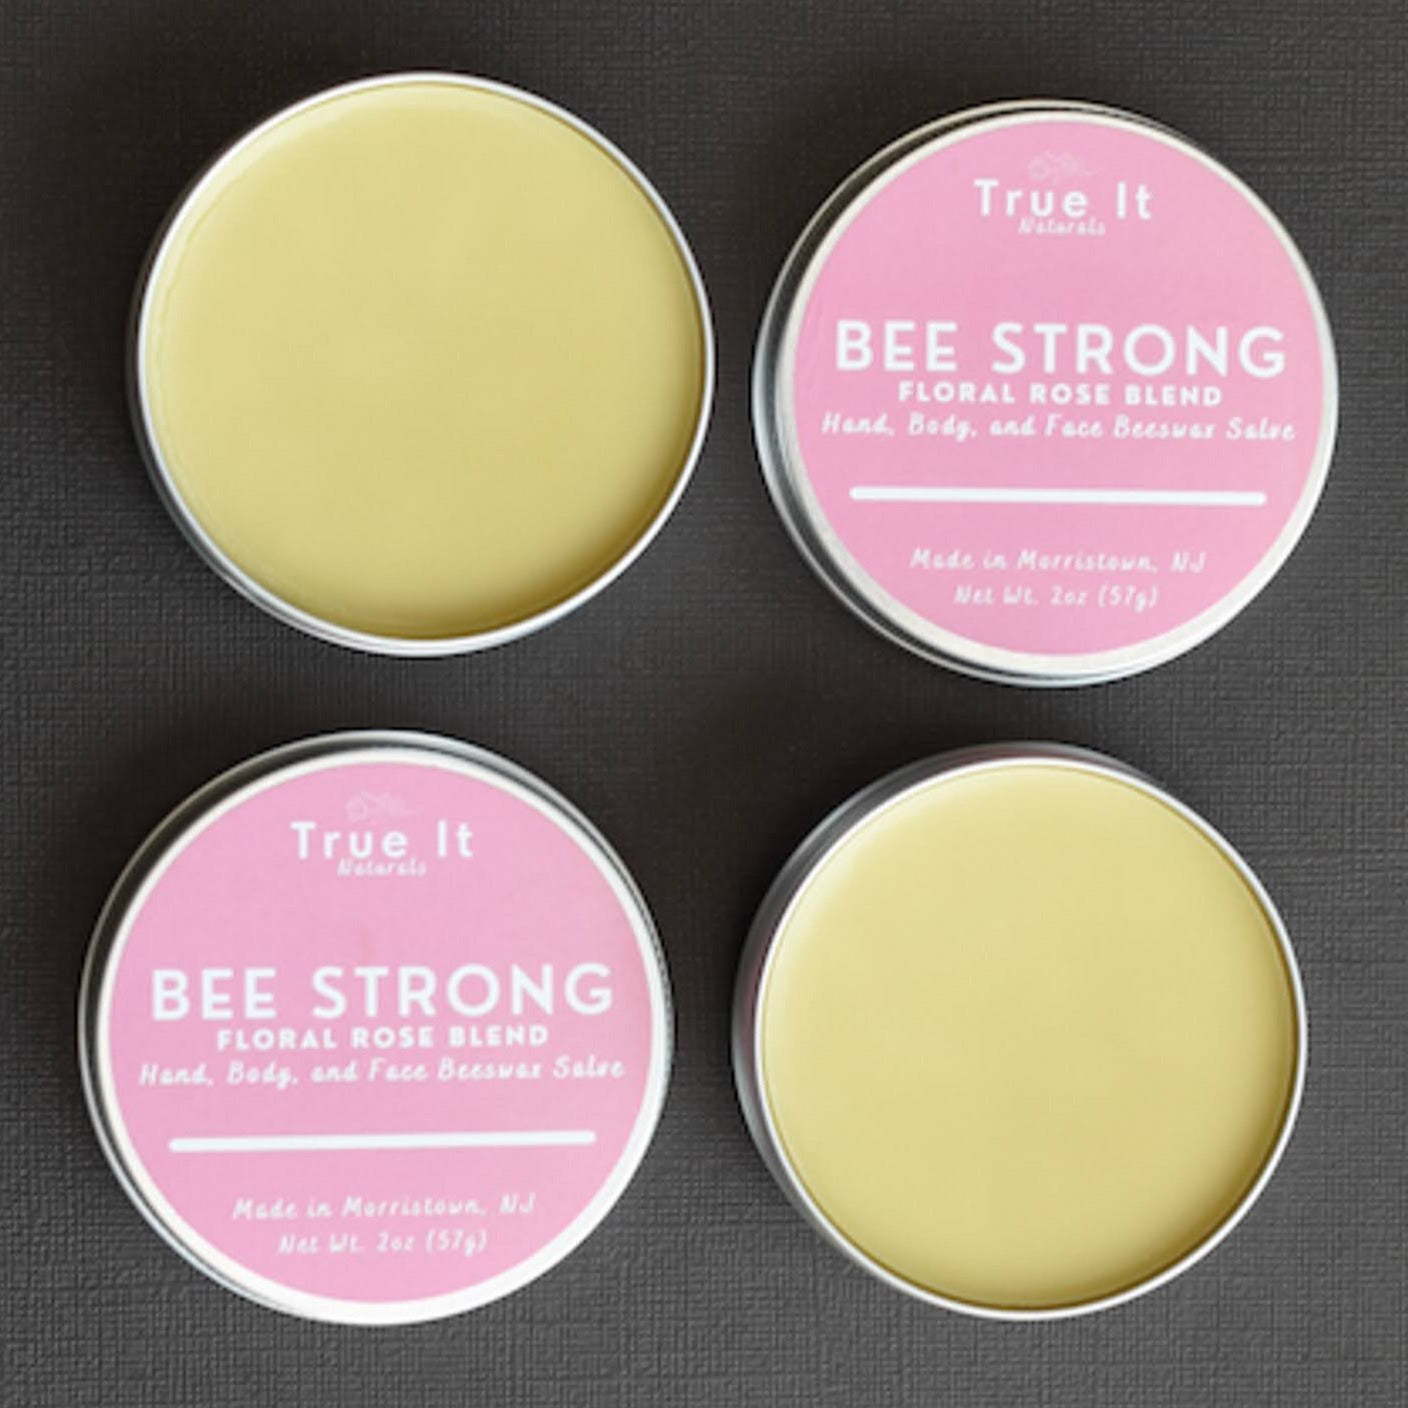 BEE STRONG Rose Local Organic Beeswax Salve - 2 oz